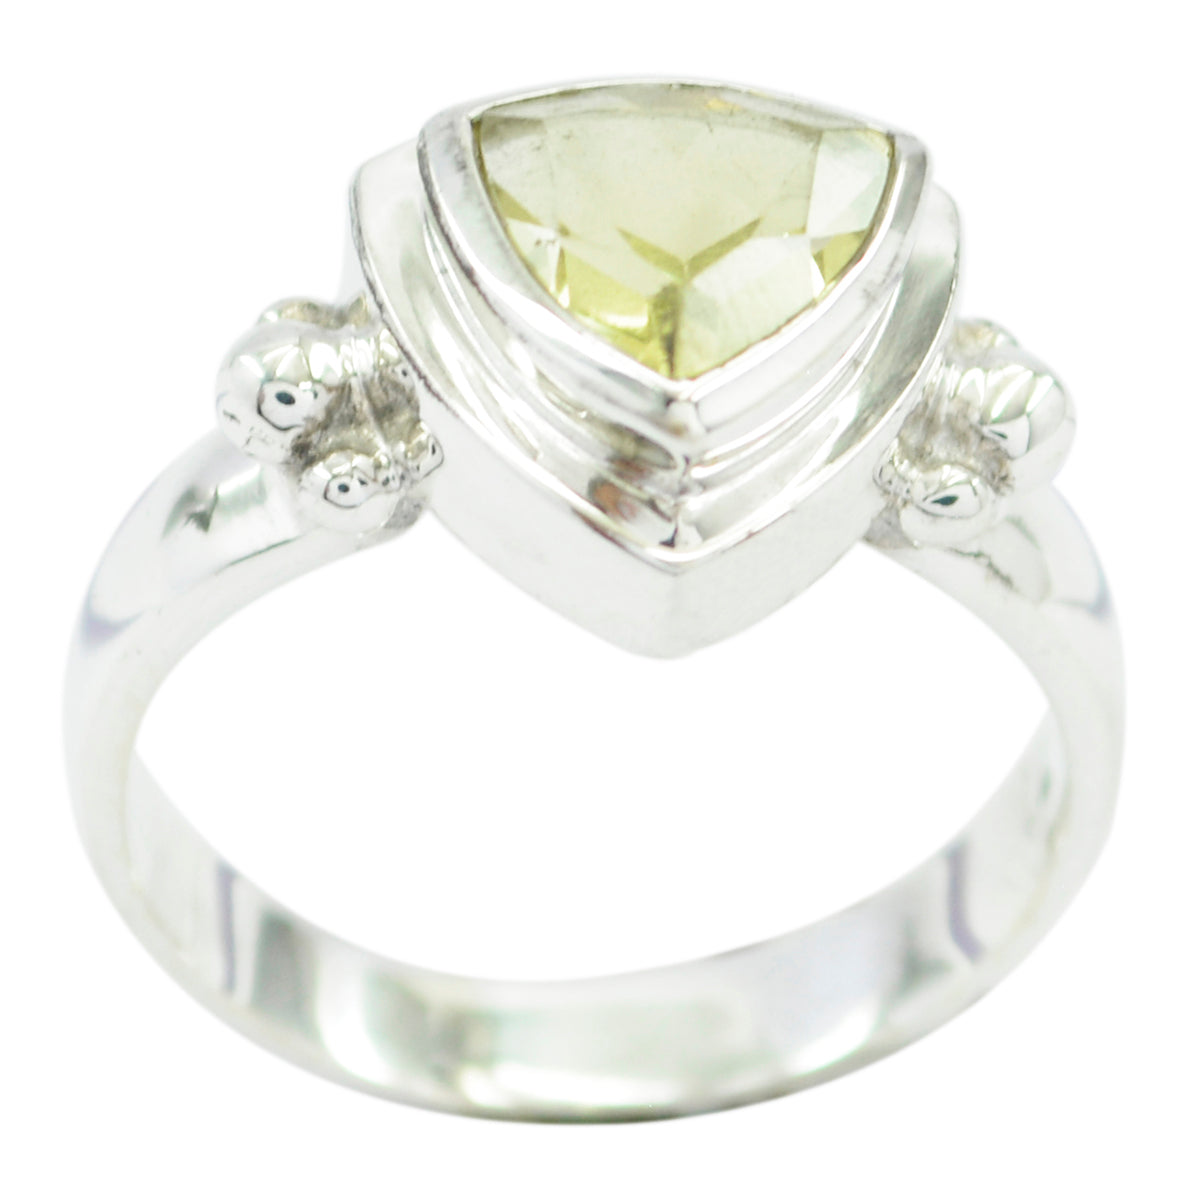 Adorable Gemstone Lemon Quartz Silver Ring Wholesale Jewelry Supplies